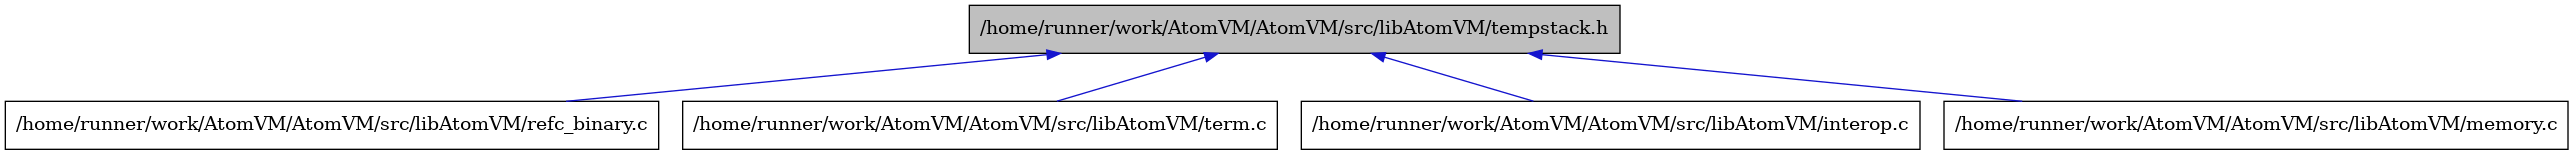 digraph {
    graph [bgcolor="#00000000"]
    node [shape=rectangle style=filled fillcolor="#FFFFFF" font=Helvetica padding=2]
    edge [color="#1414CE"]
    "1" [label="/home/runner/work/AtomVM/AtomVM/src/libAtomVM/tempstack.h" tooltip="/home/runner/work/AtomVM/AtomVM/src/libAtomVM/tempstack.h" fillcolor="#BFBFBF"]
    "4" [label="/home/runner/work/AtomVM/AtomVM/src/libAtomVM/refc_binary.c" tooltip="/home/runner/work/AtomVM/AtomVM/src/libAtomVM/refc_binary.c"]
    "5" [label="/home/runner/work/AtomVM/AtomVM/src/libAtomVM/term.c" tooltip="/home/runner/work/AtomVM/AtomVM/src/libAtomVM/term.c"]
    "2" [label="/home/runner/work/AtomVM/AtomVM/src/libAtomVM/interop.c" tooltip="/home/runner/work/AtomVM/AtomVM/src/libAtomVM/interop.c"]
    "3" [label="/home/runner/work/AtomVM/AtomVM/src/libAtomVM/memory.c" tooltip="/home/runner/work/AtomVM/AtomVM/src/libAtomVM/memory.c"]
    "1" -> "2" [dir=back tooltip="include"]
    "1" -> "3" [dir=back tooltip="include"]
    "1" -> "4" [dir=back tooltip="include"]
    "1" -> "5" [dir=back tooltip="include"]
}